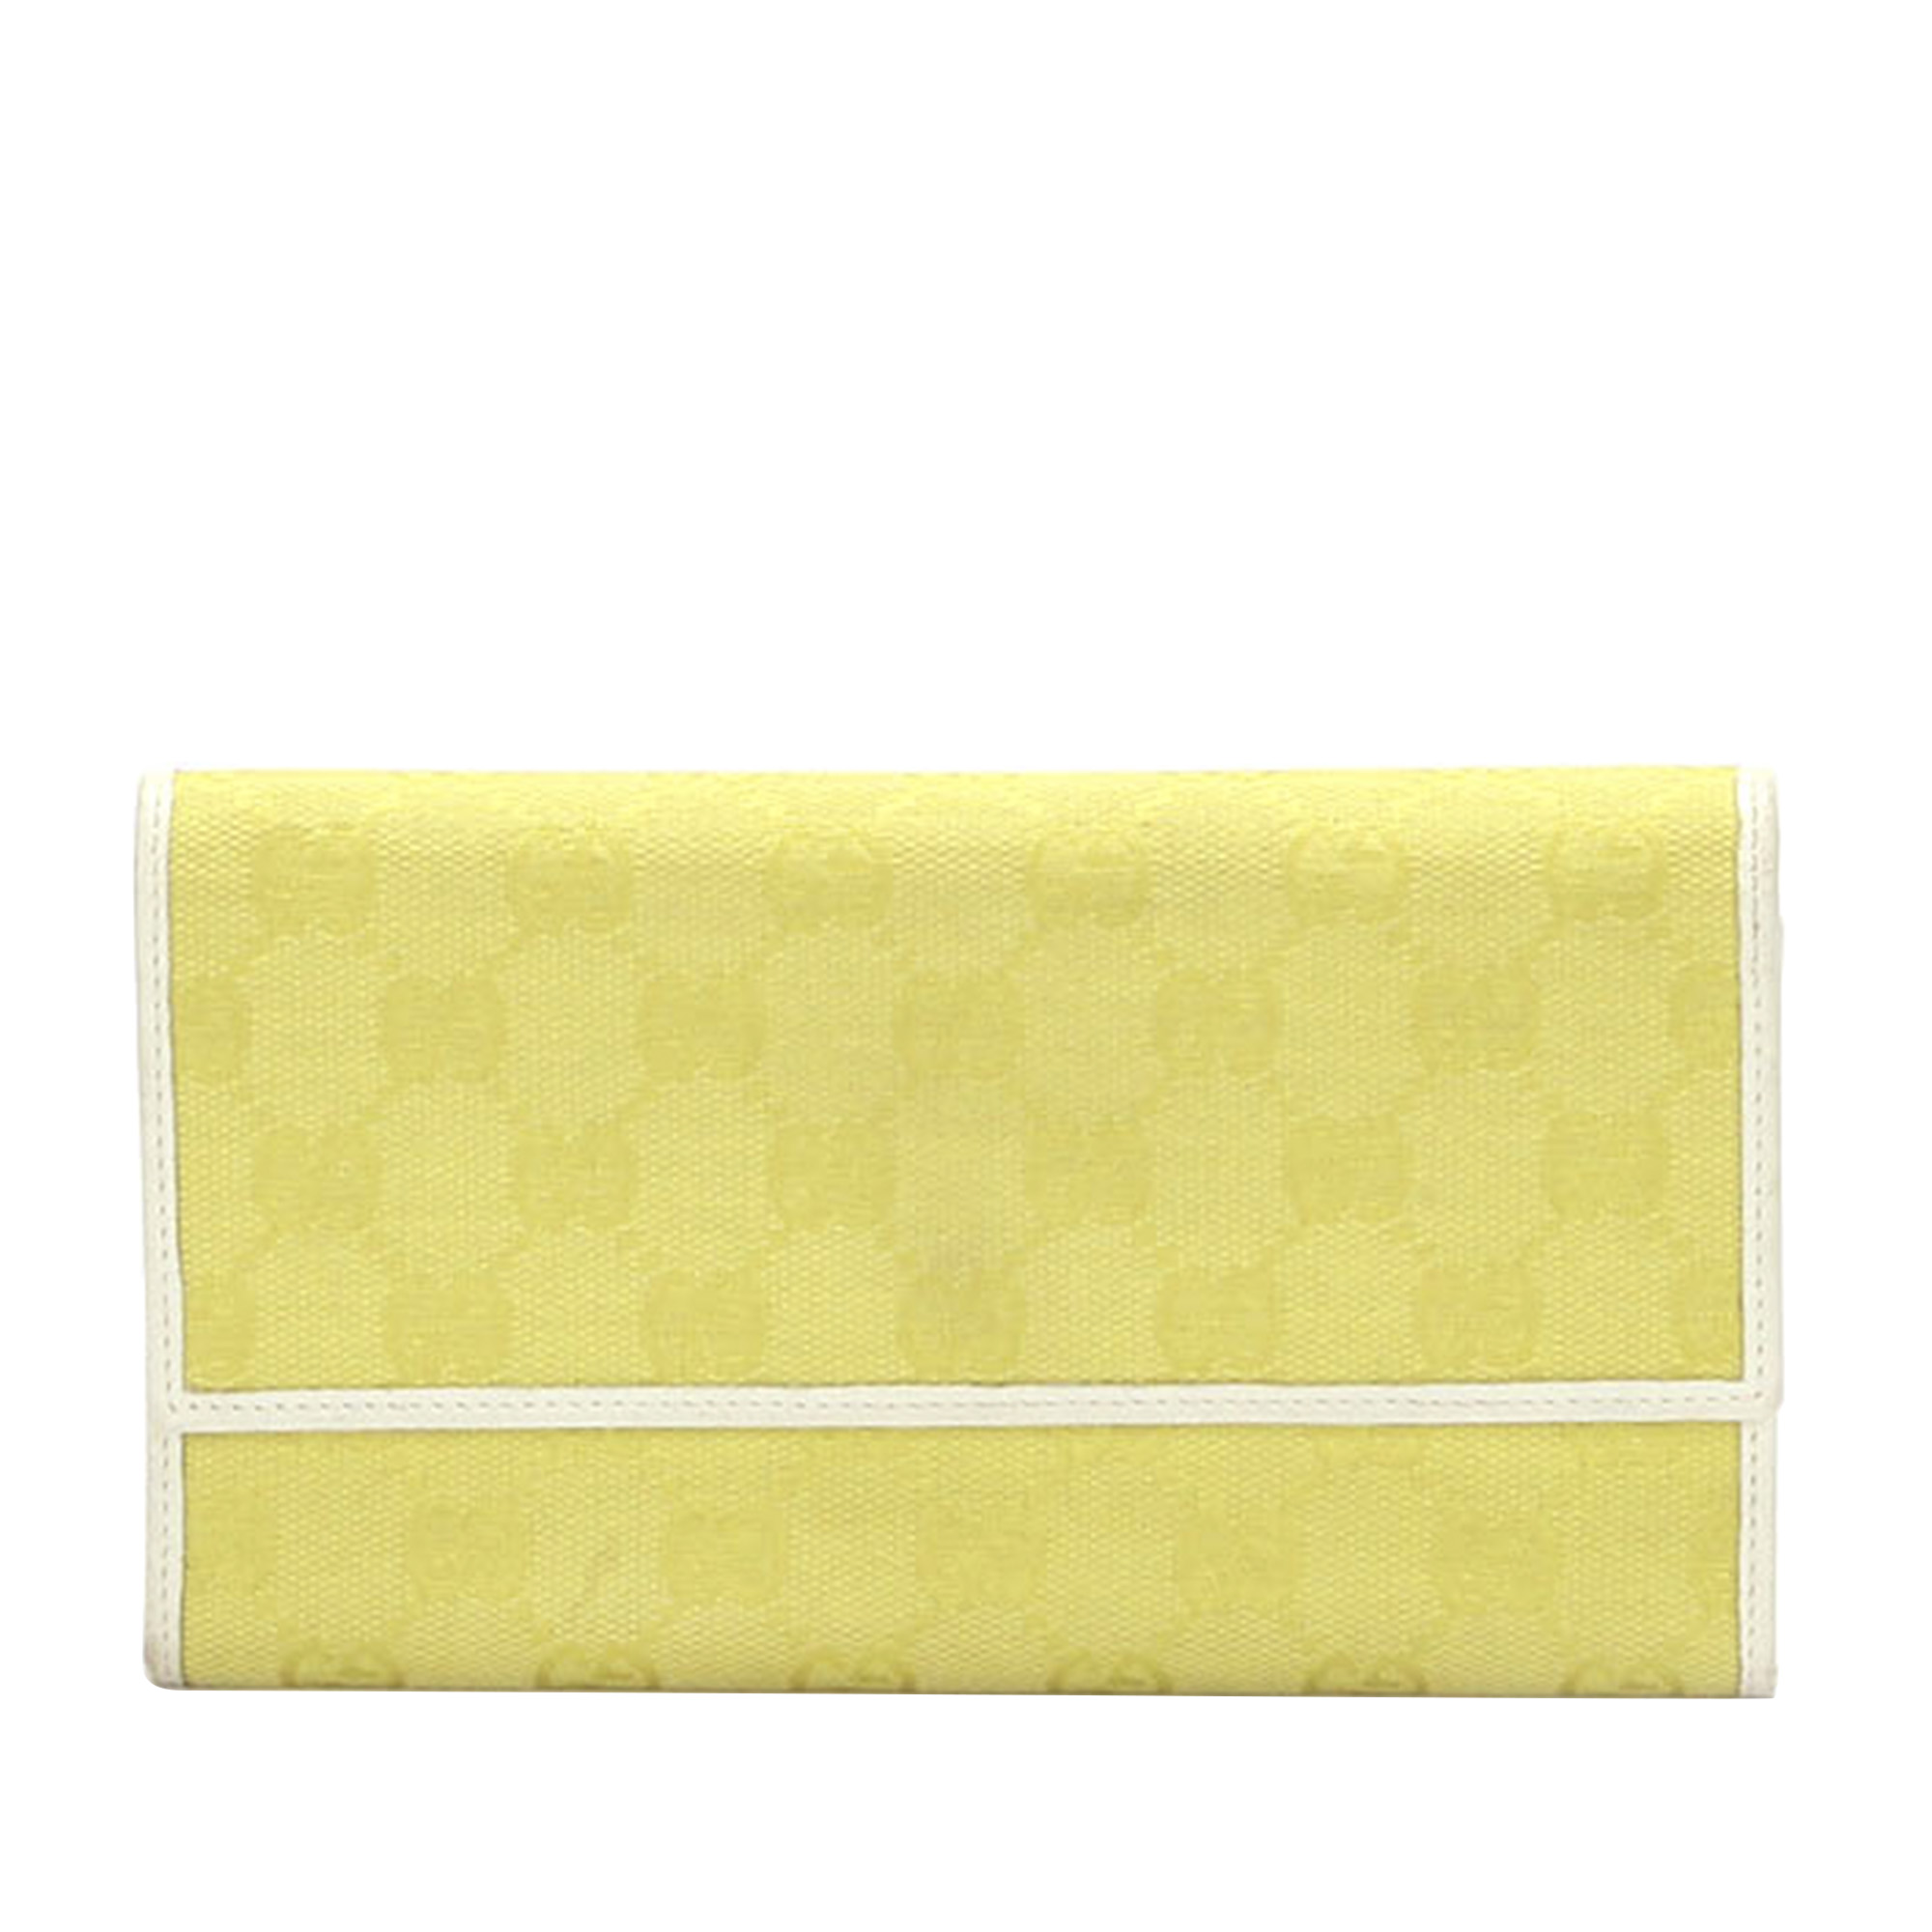 Gucci Yellow GG Canvas Long Wallet